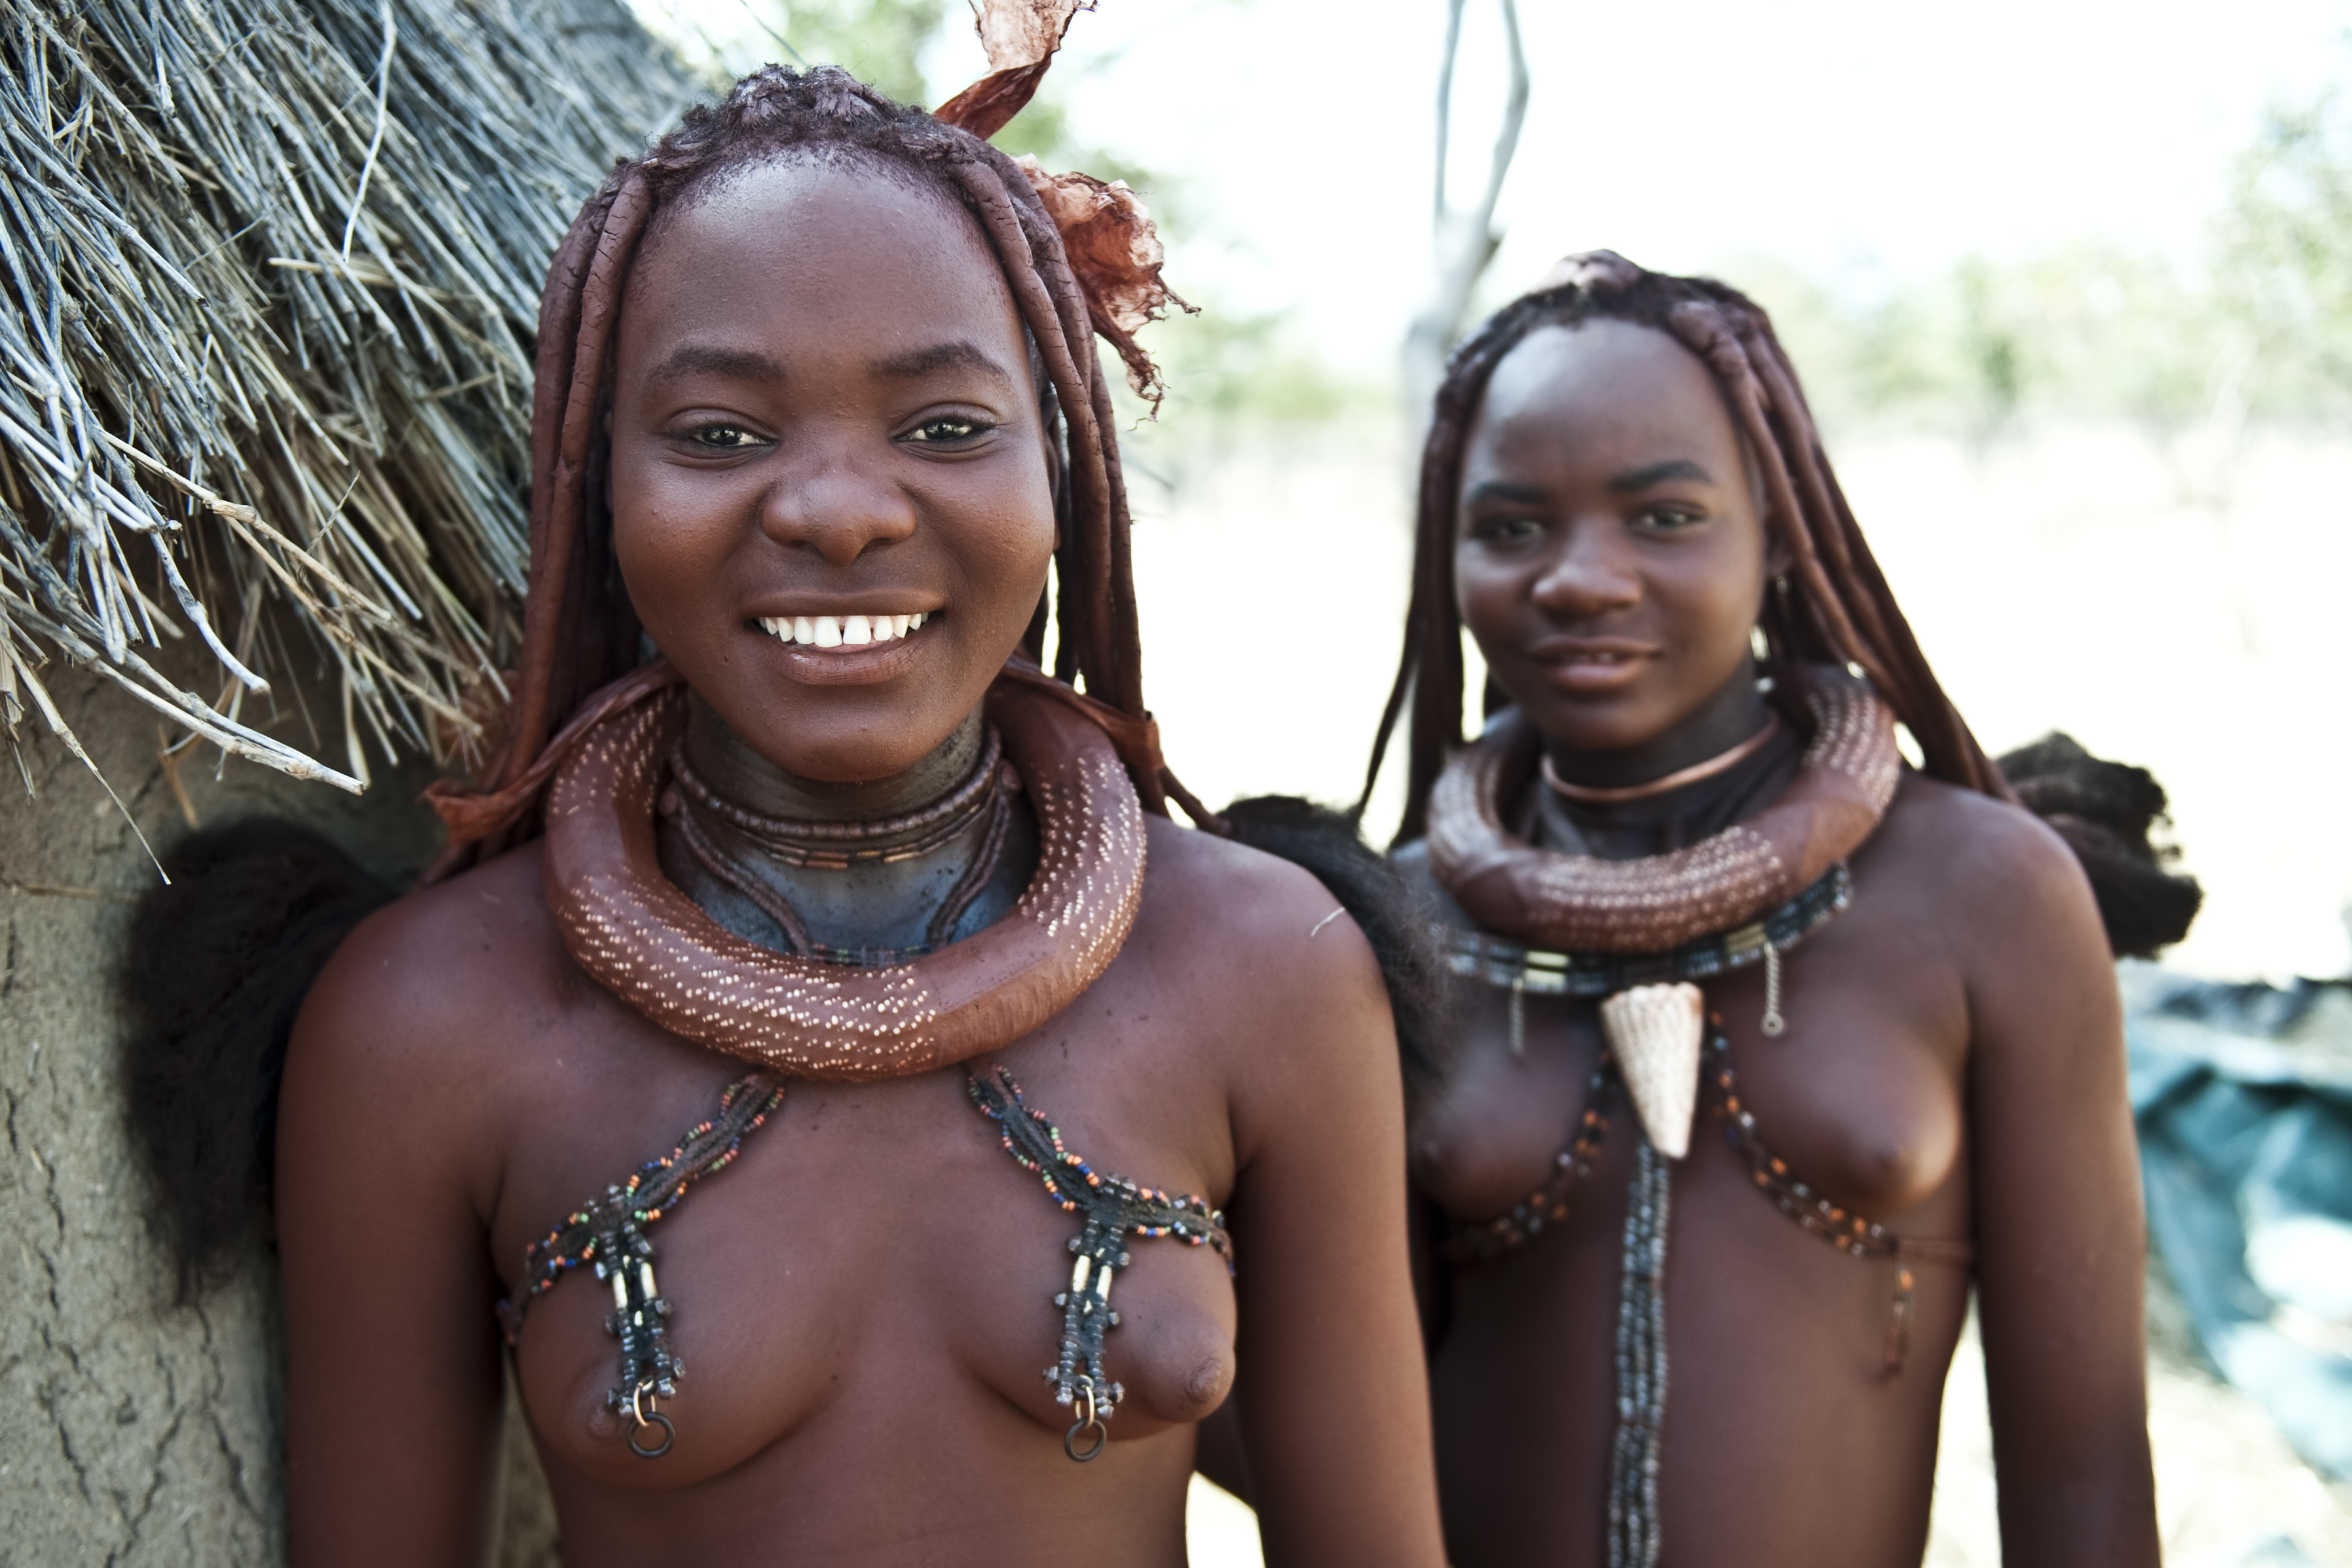 an African girl posing